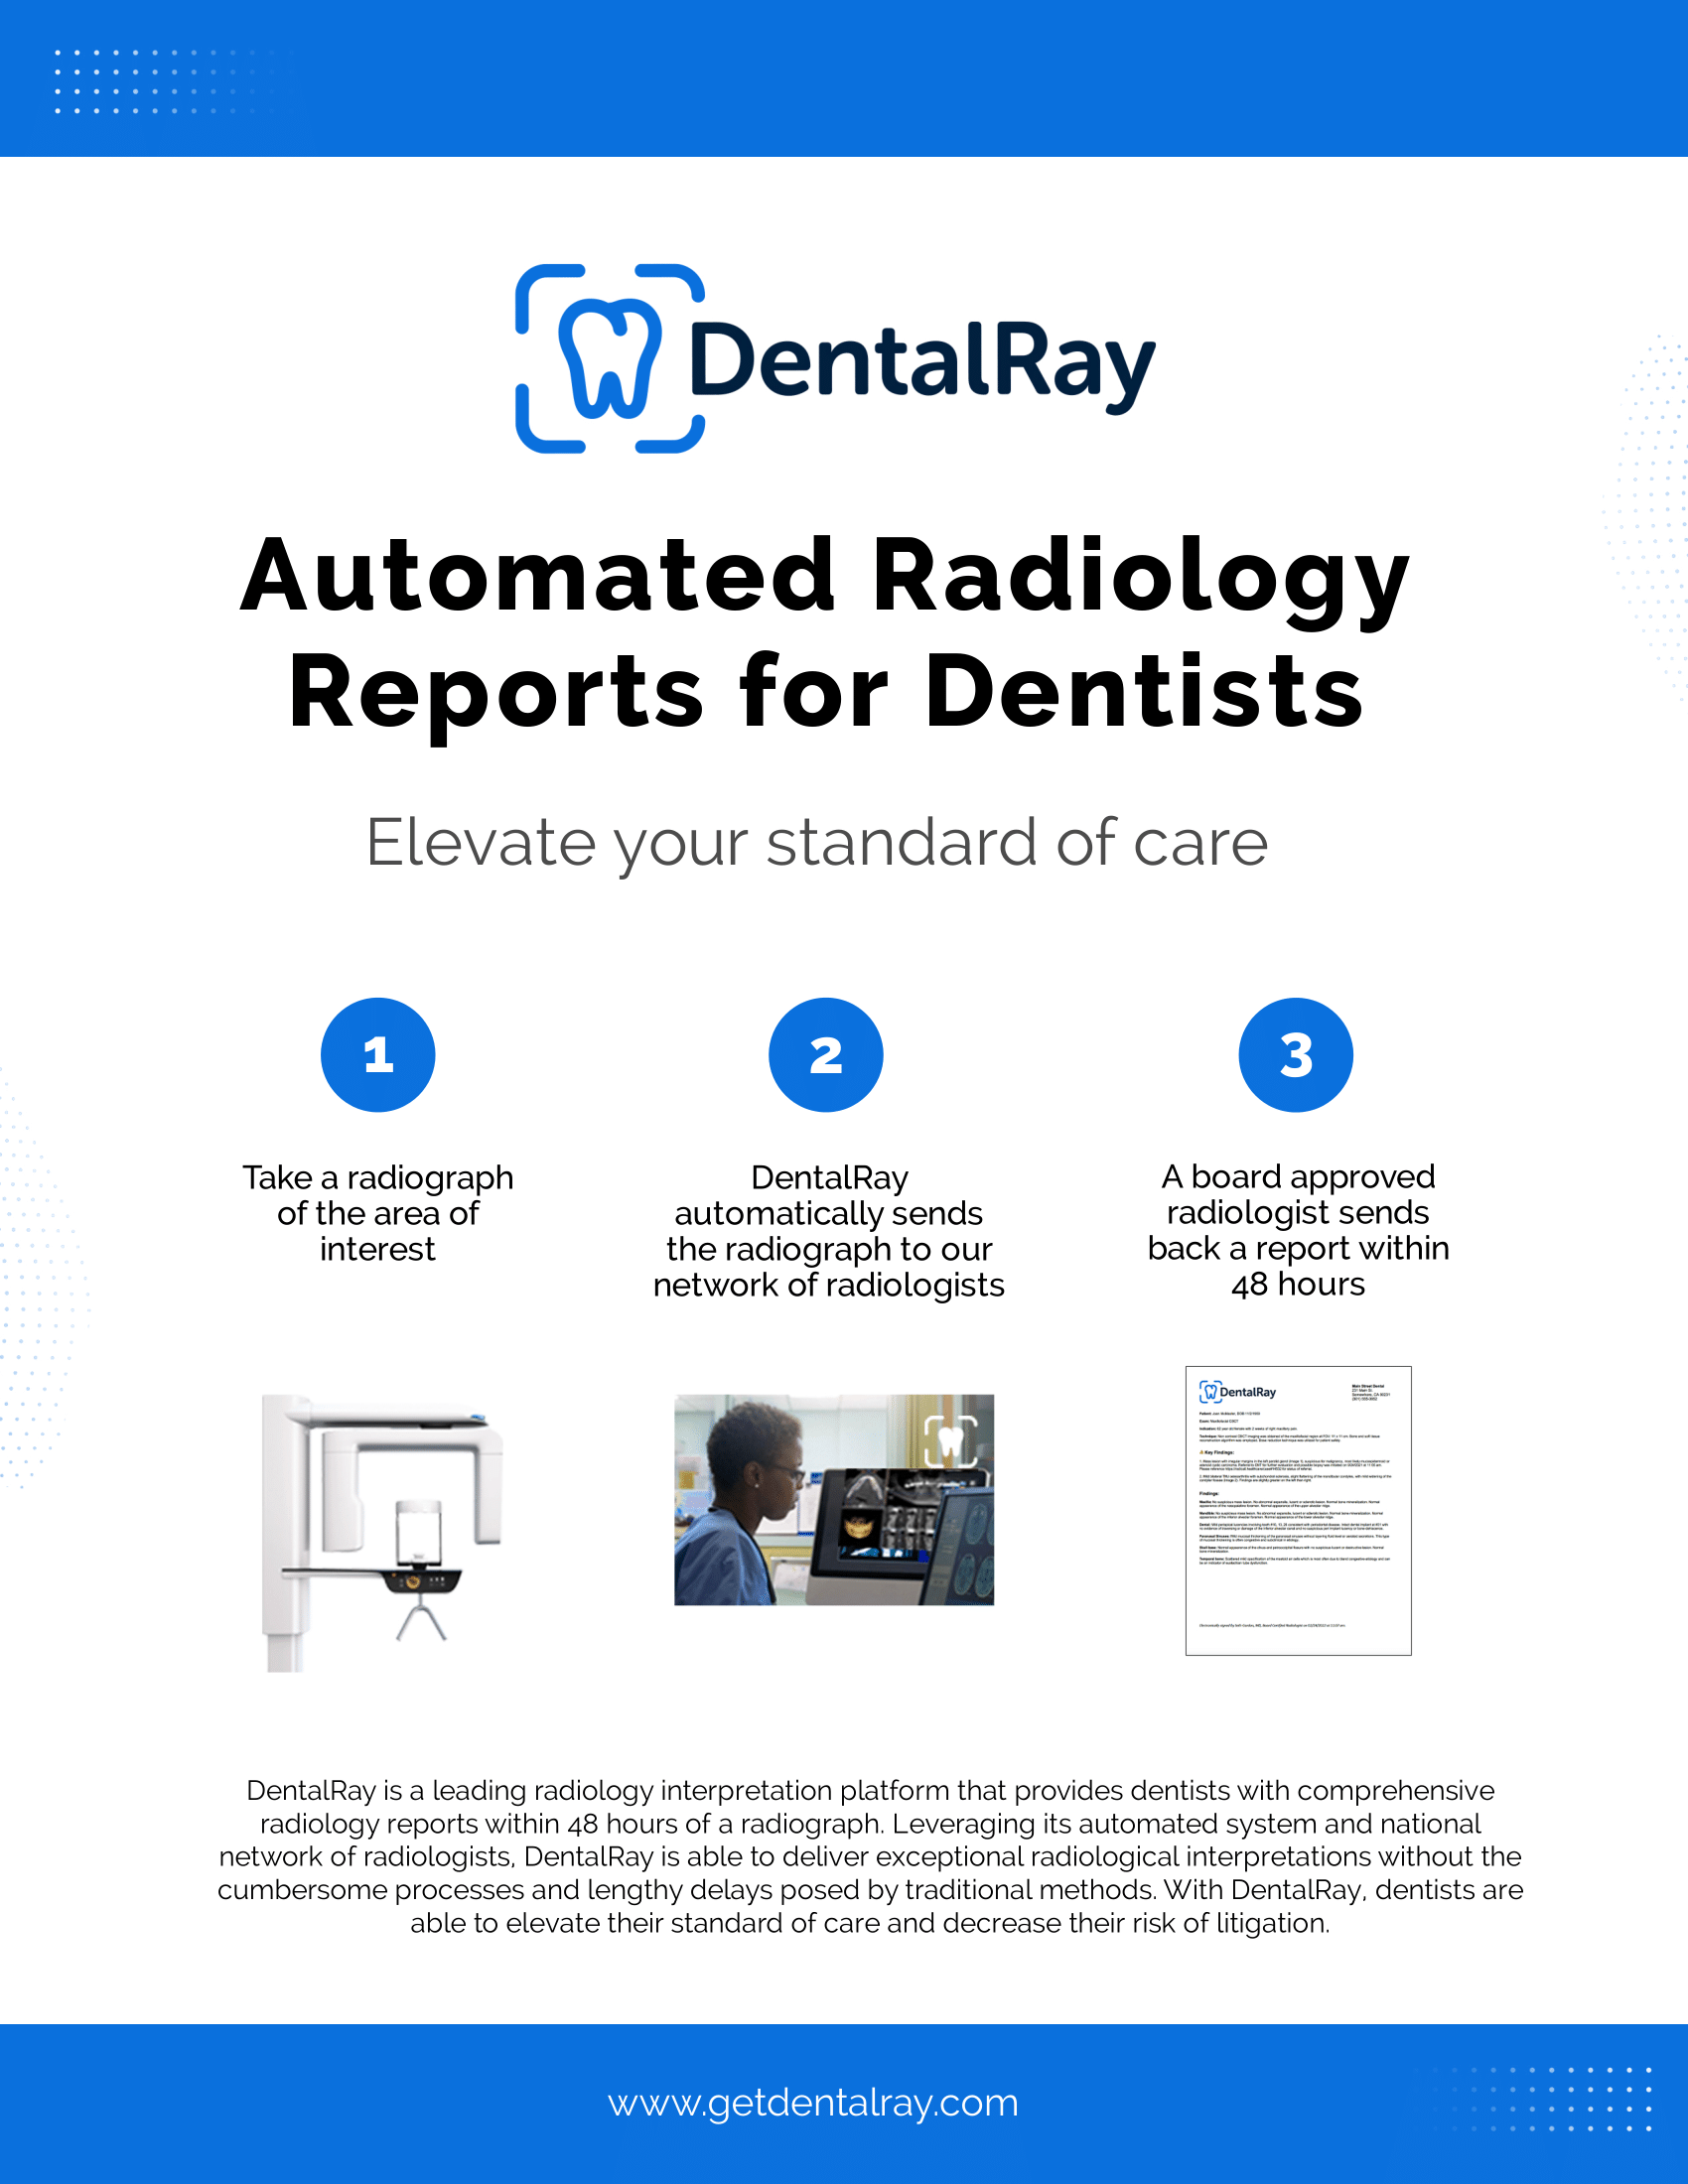 DentalRay Overview 9-19-22-1